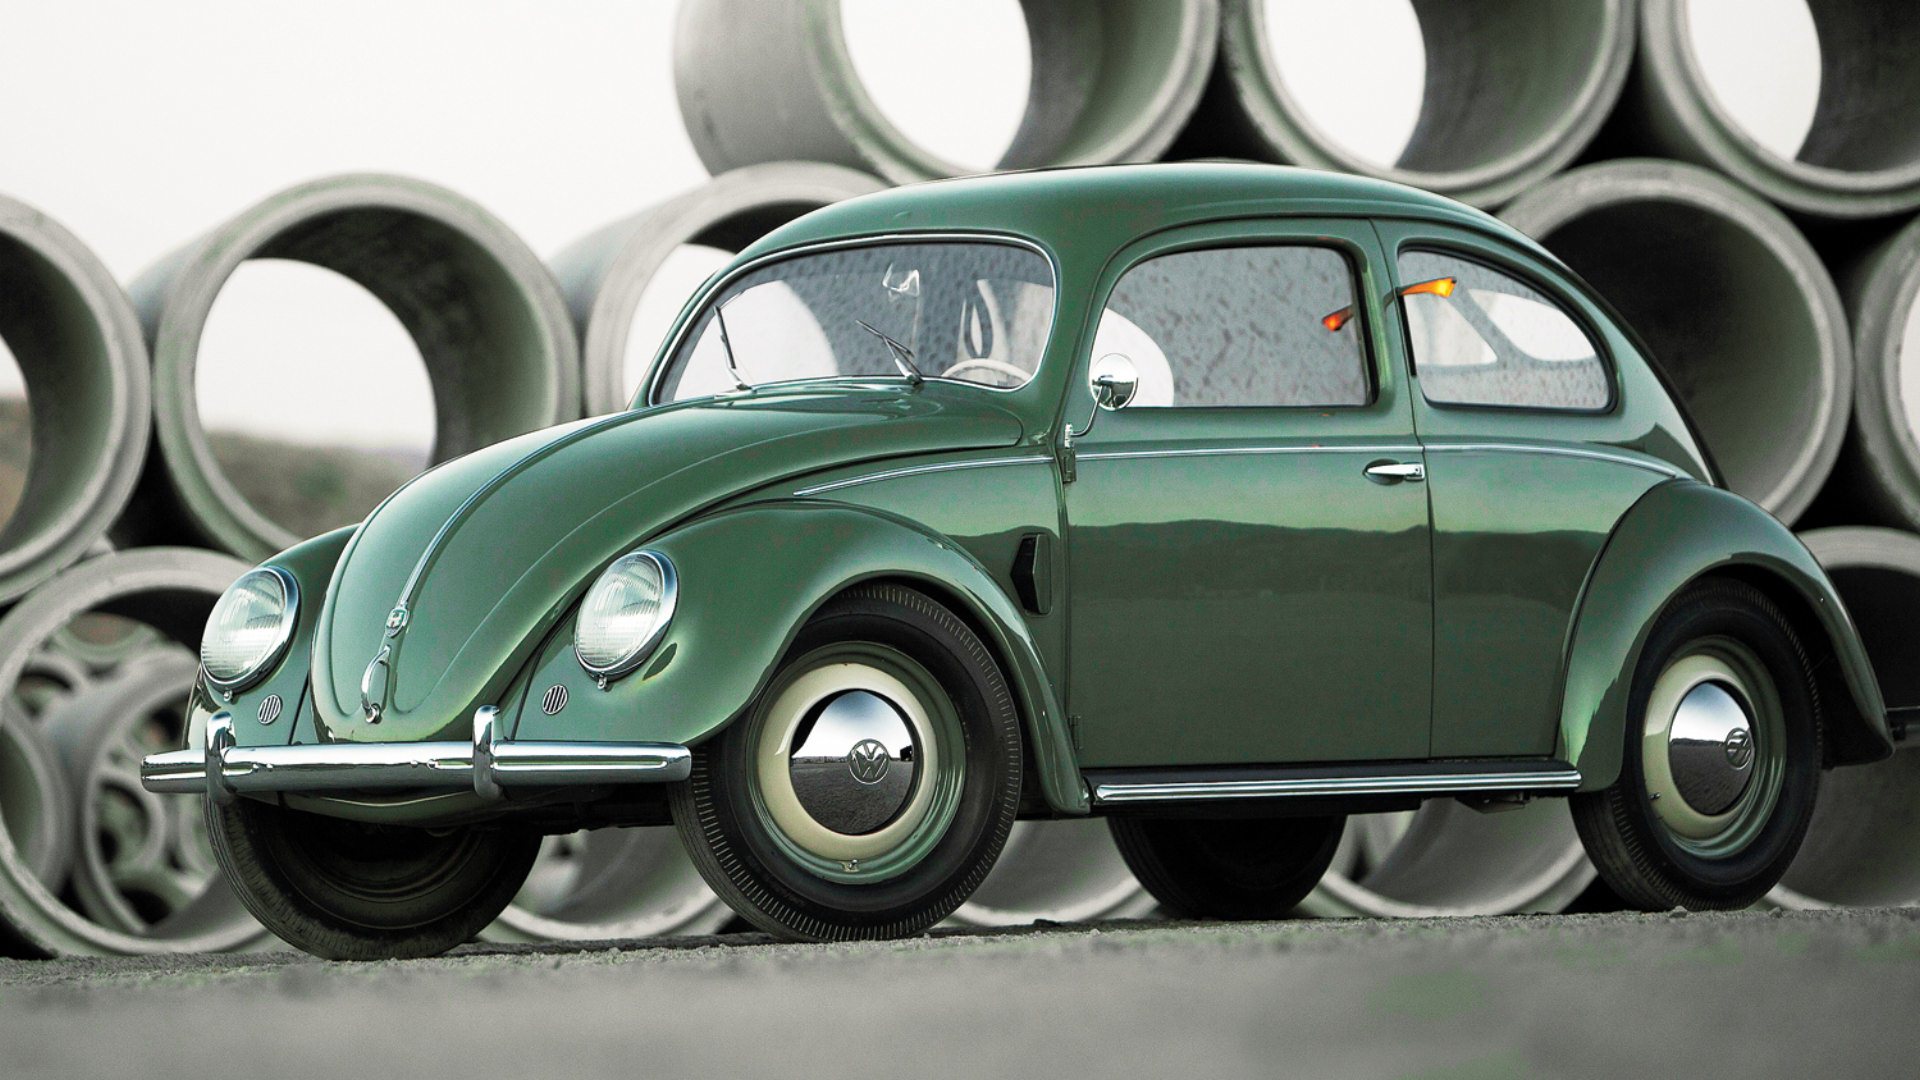 Description Volkswagen Beetle classic is a hi res Wallpaper for pc